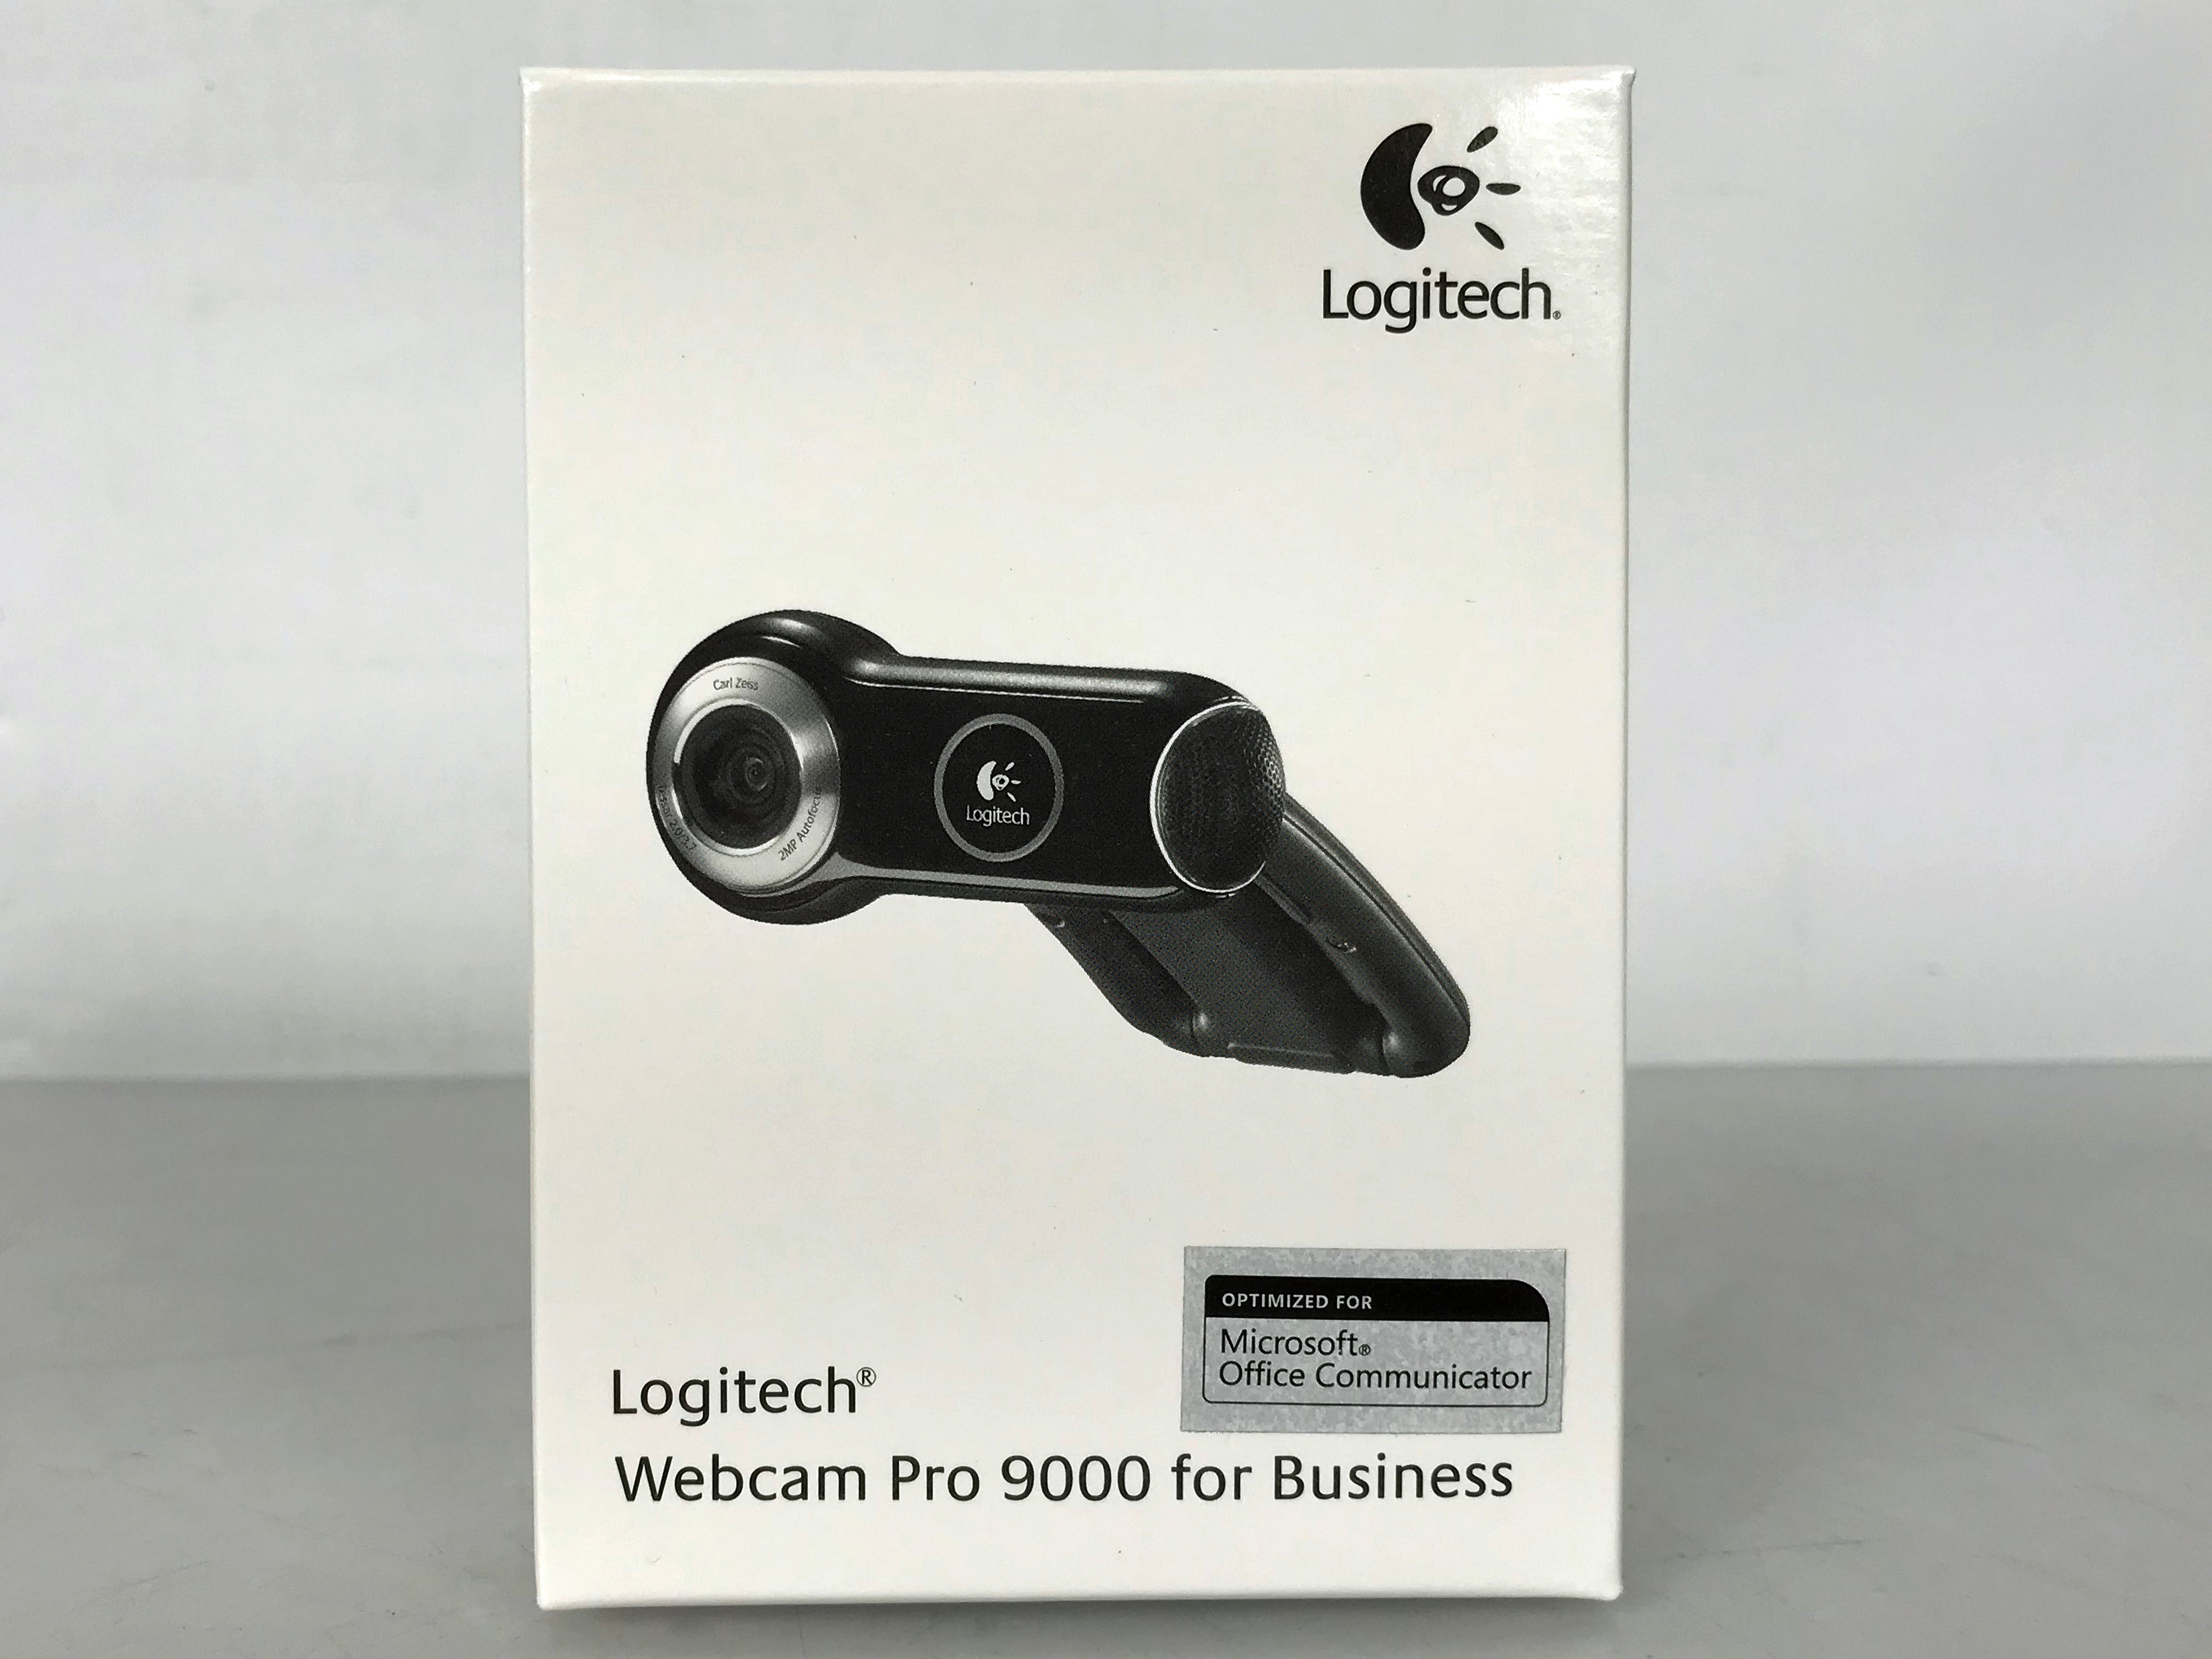 Logitech WebCam Pro 9000 for Business